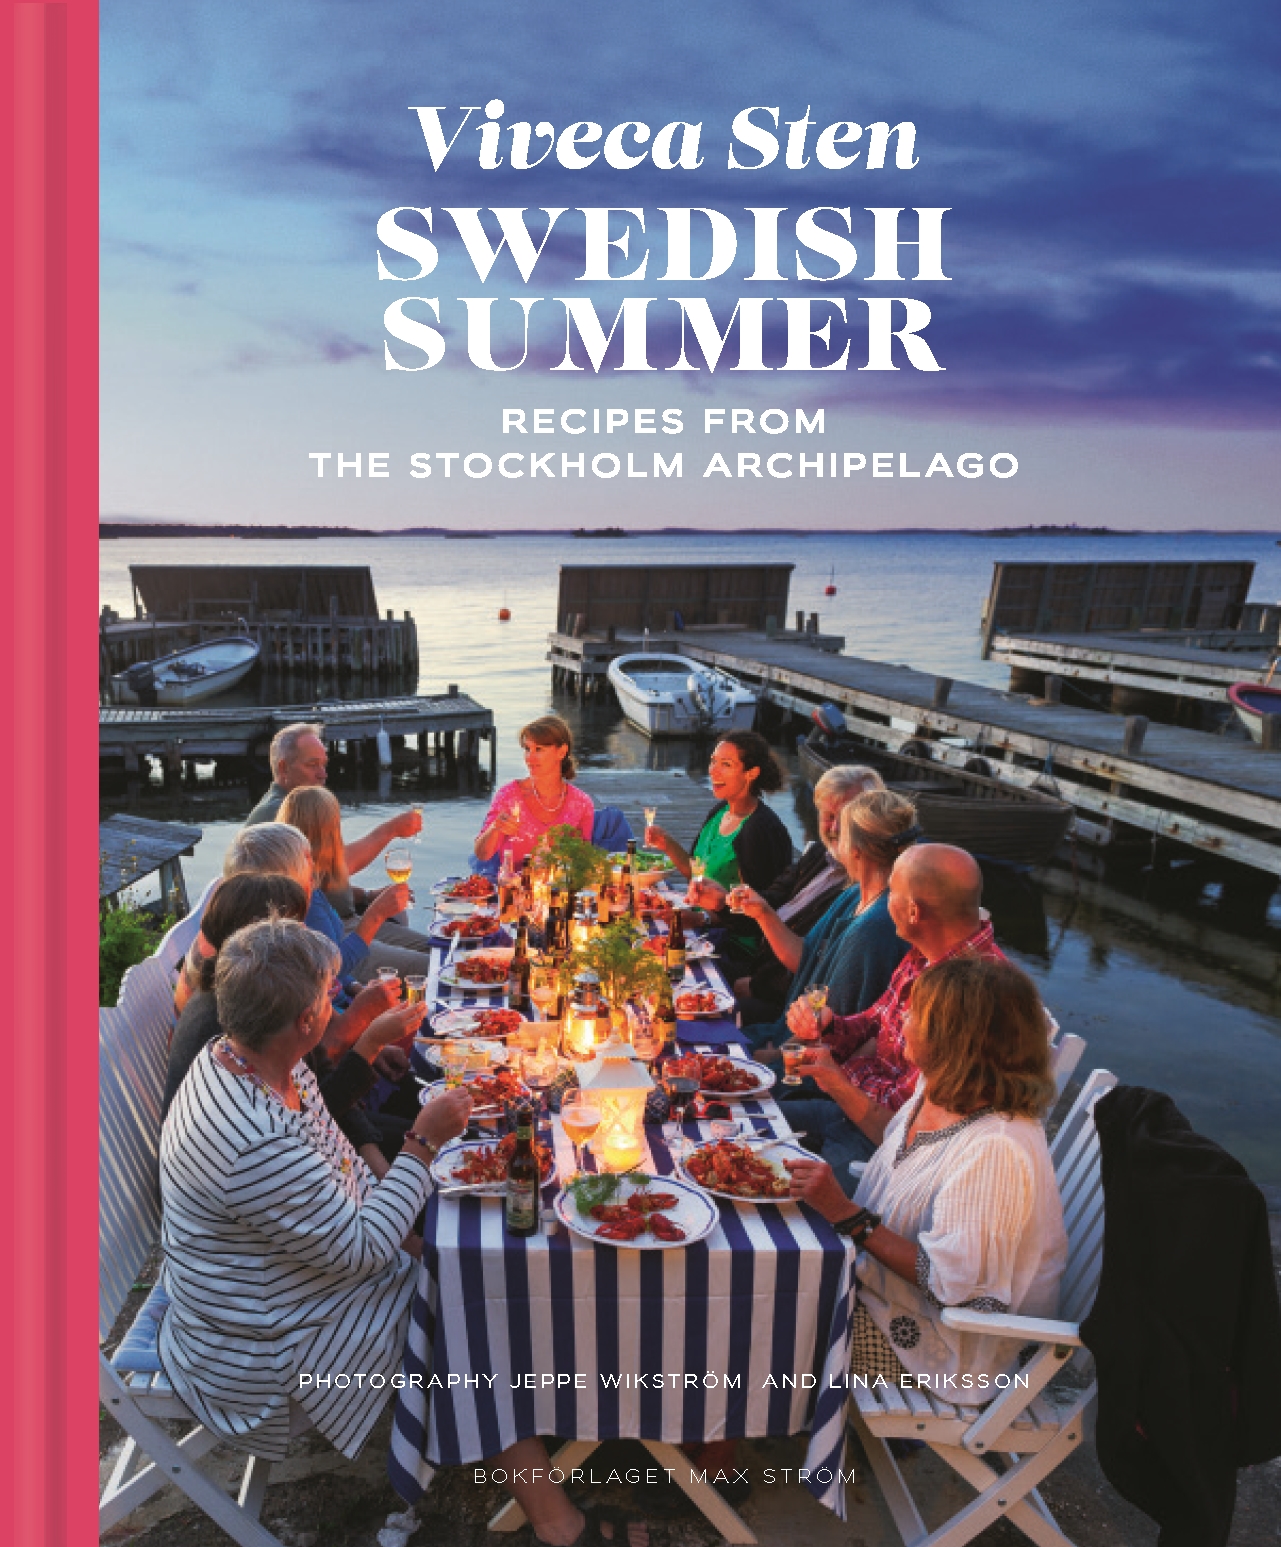 Swedish Summer recipes from the Stockholm archipelago